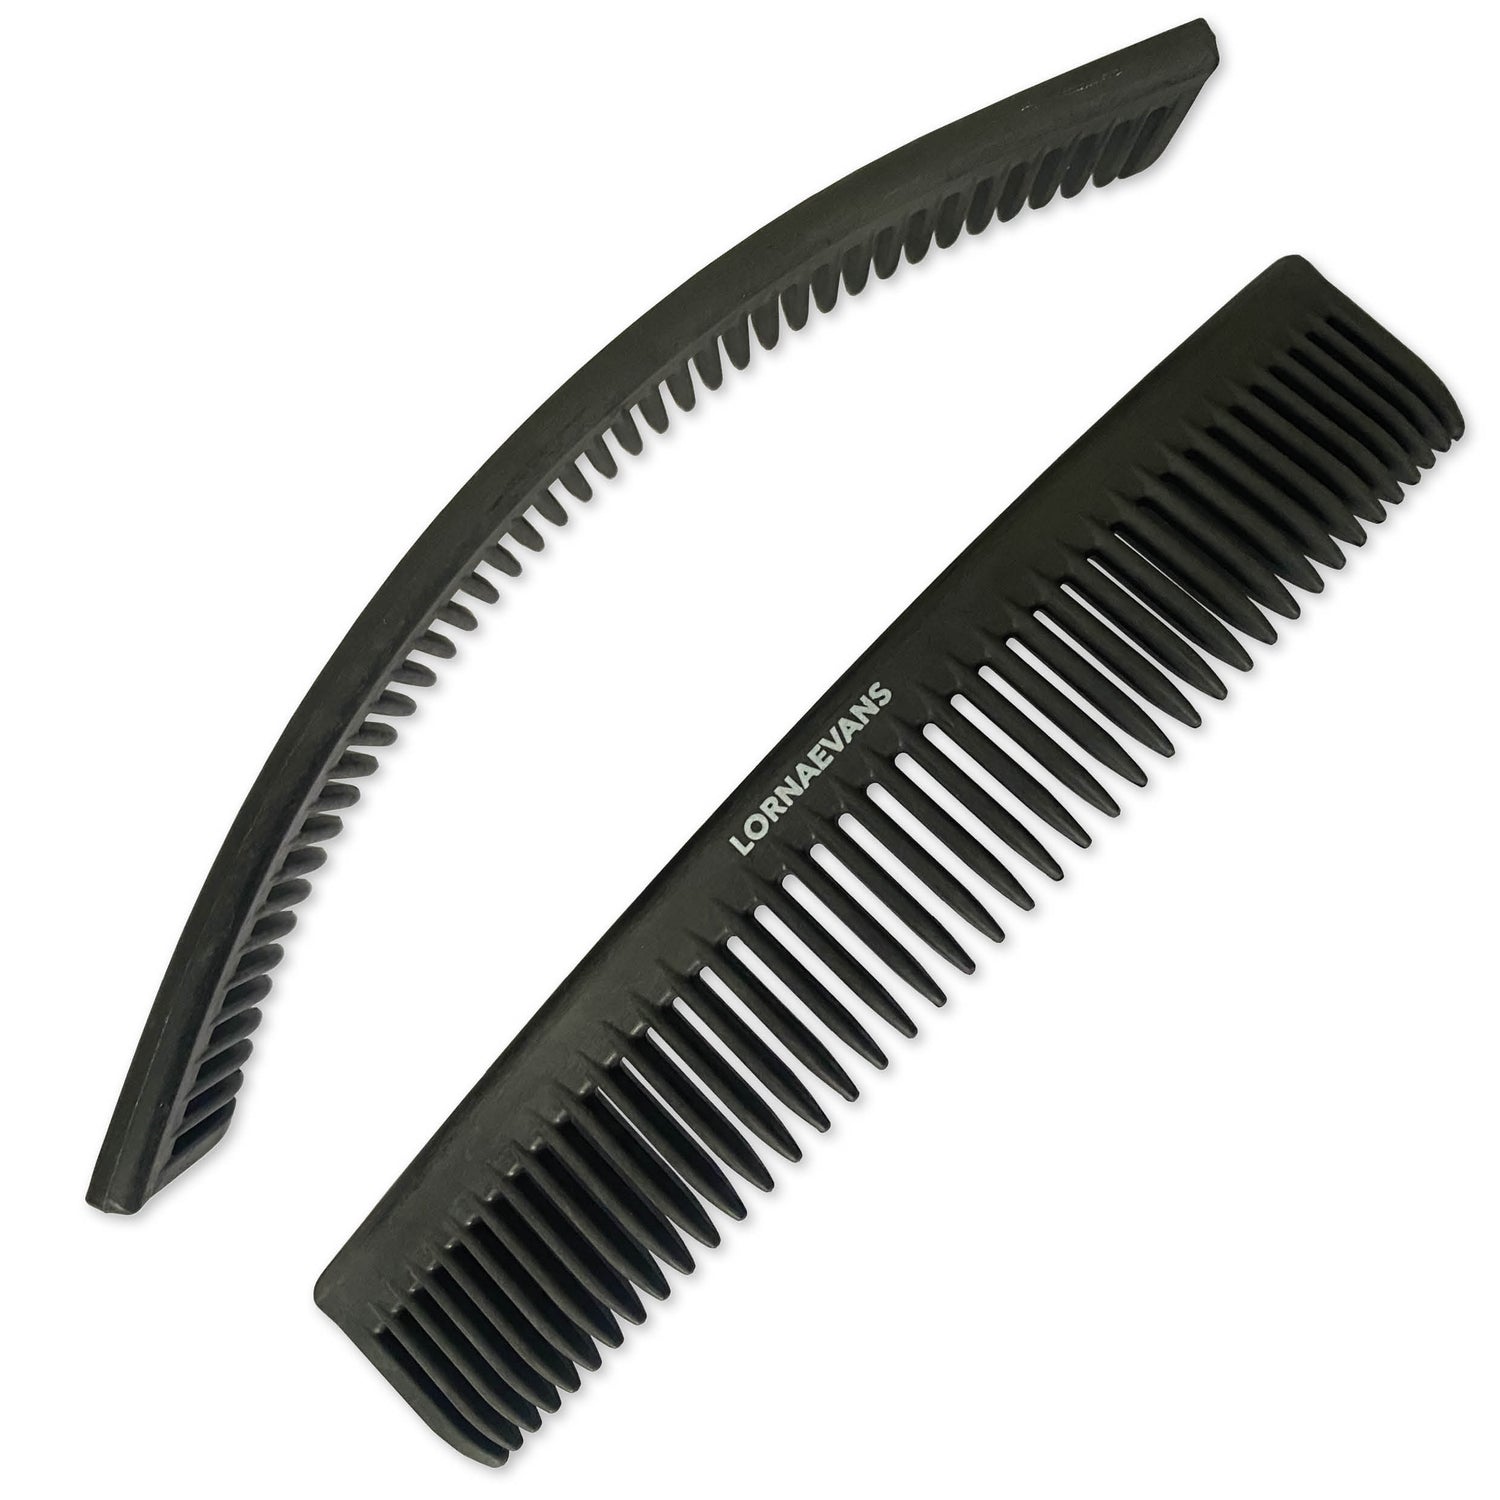 The Timesaving Comb Set